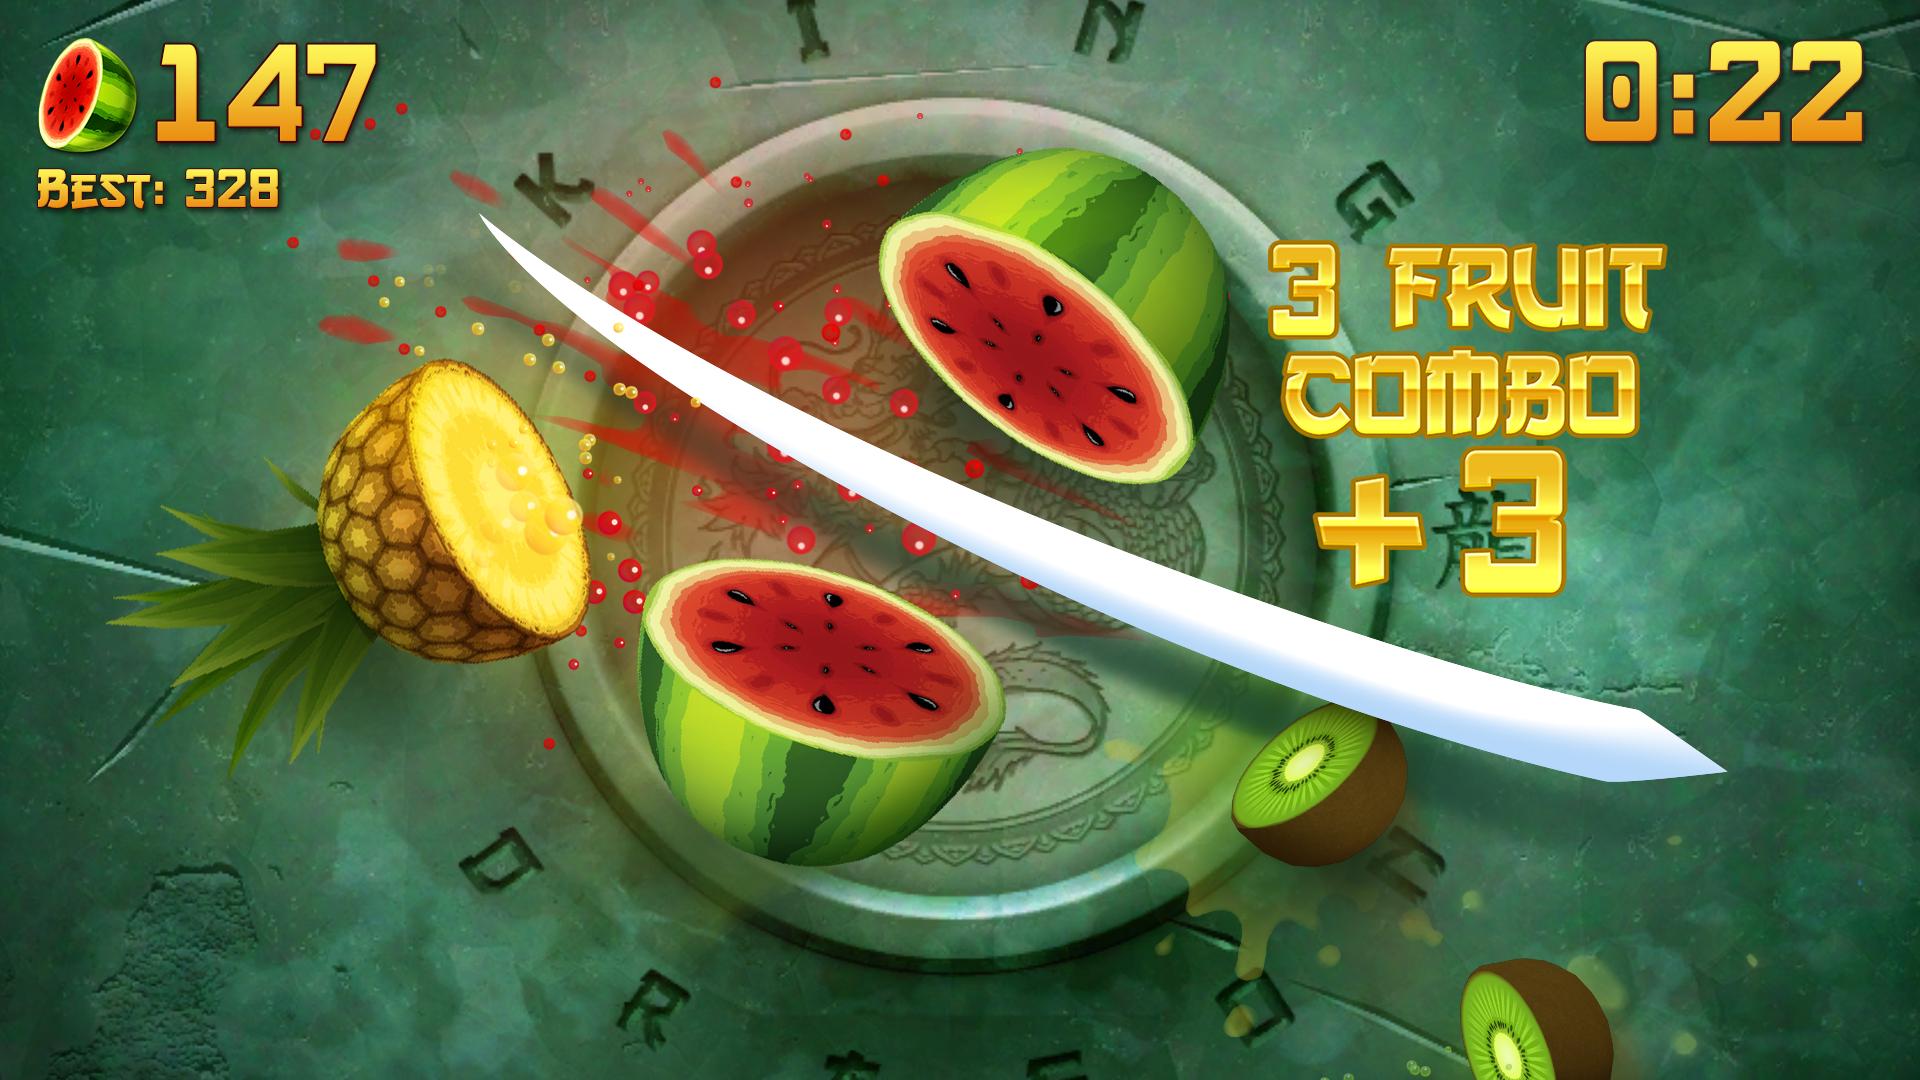 Fruit Ninja Apk Download Free Arcade Game For Android Apkpure Com